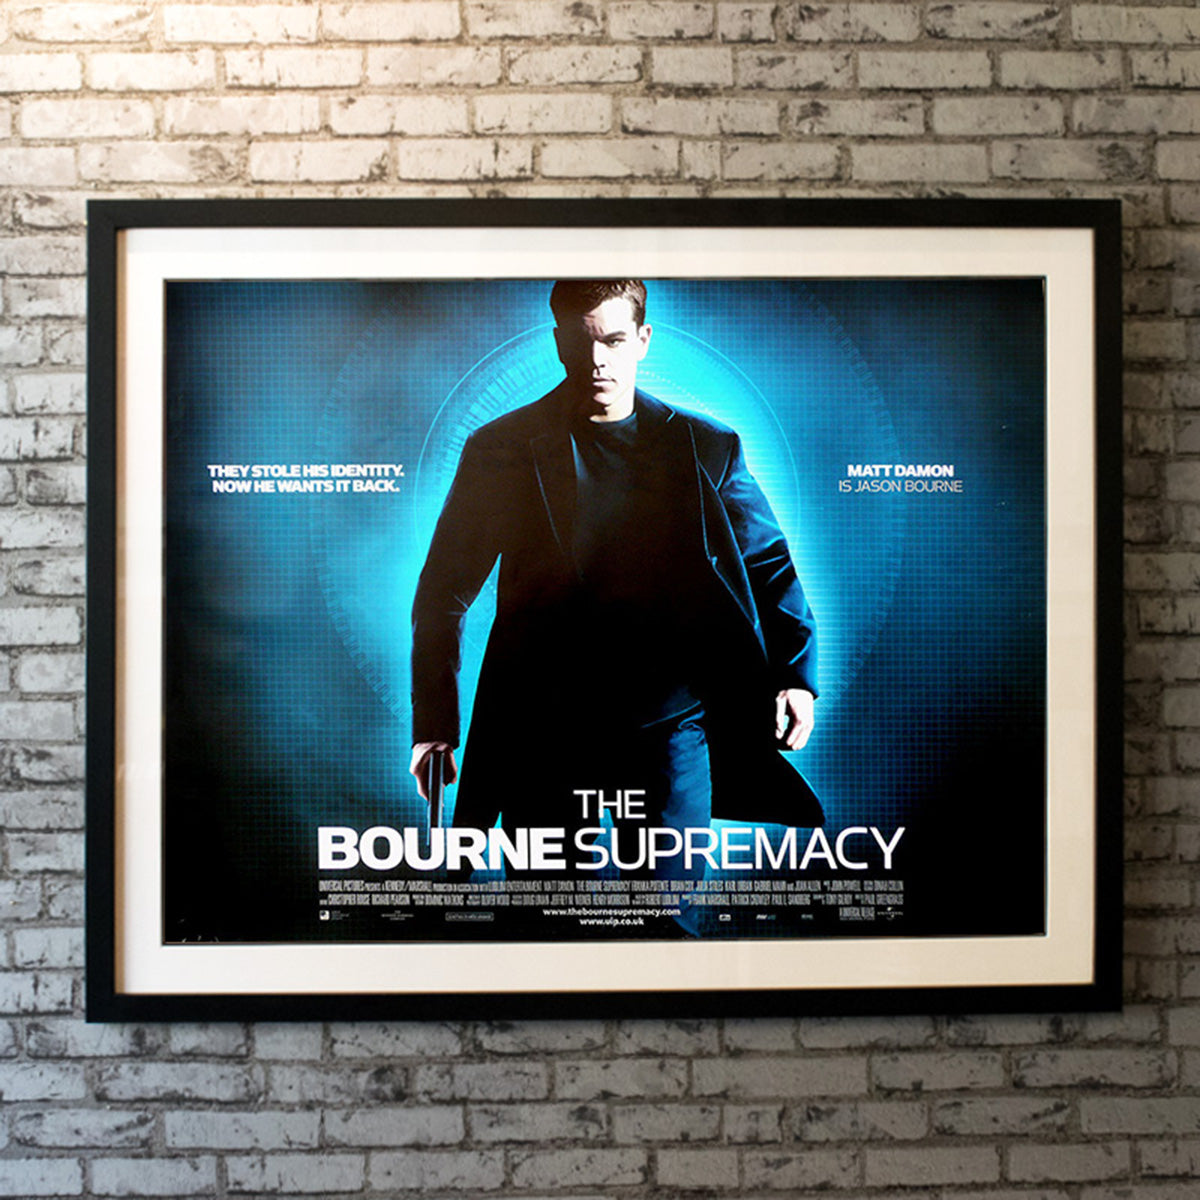 Original Movie Poster of Bourne Supremacy, The (2004)